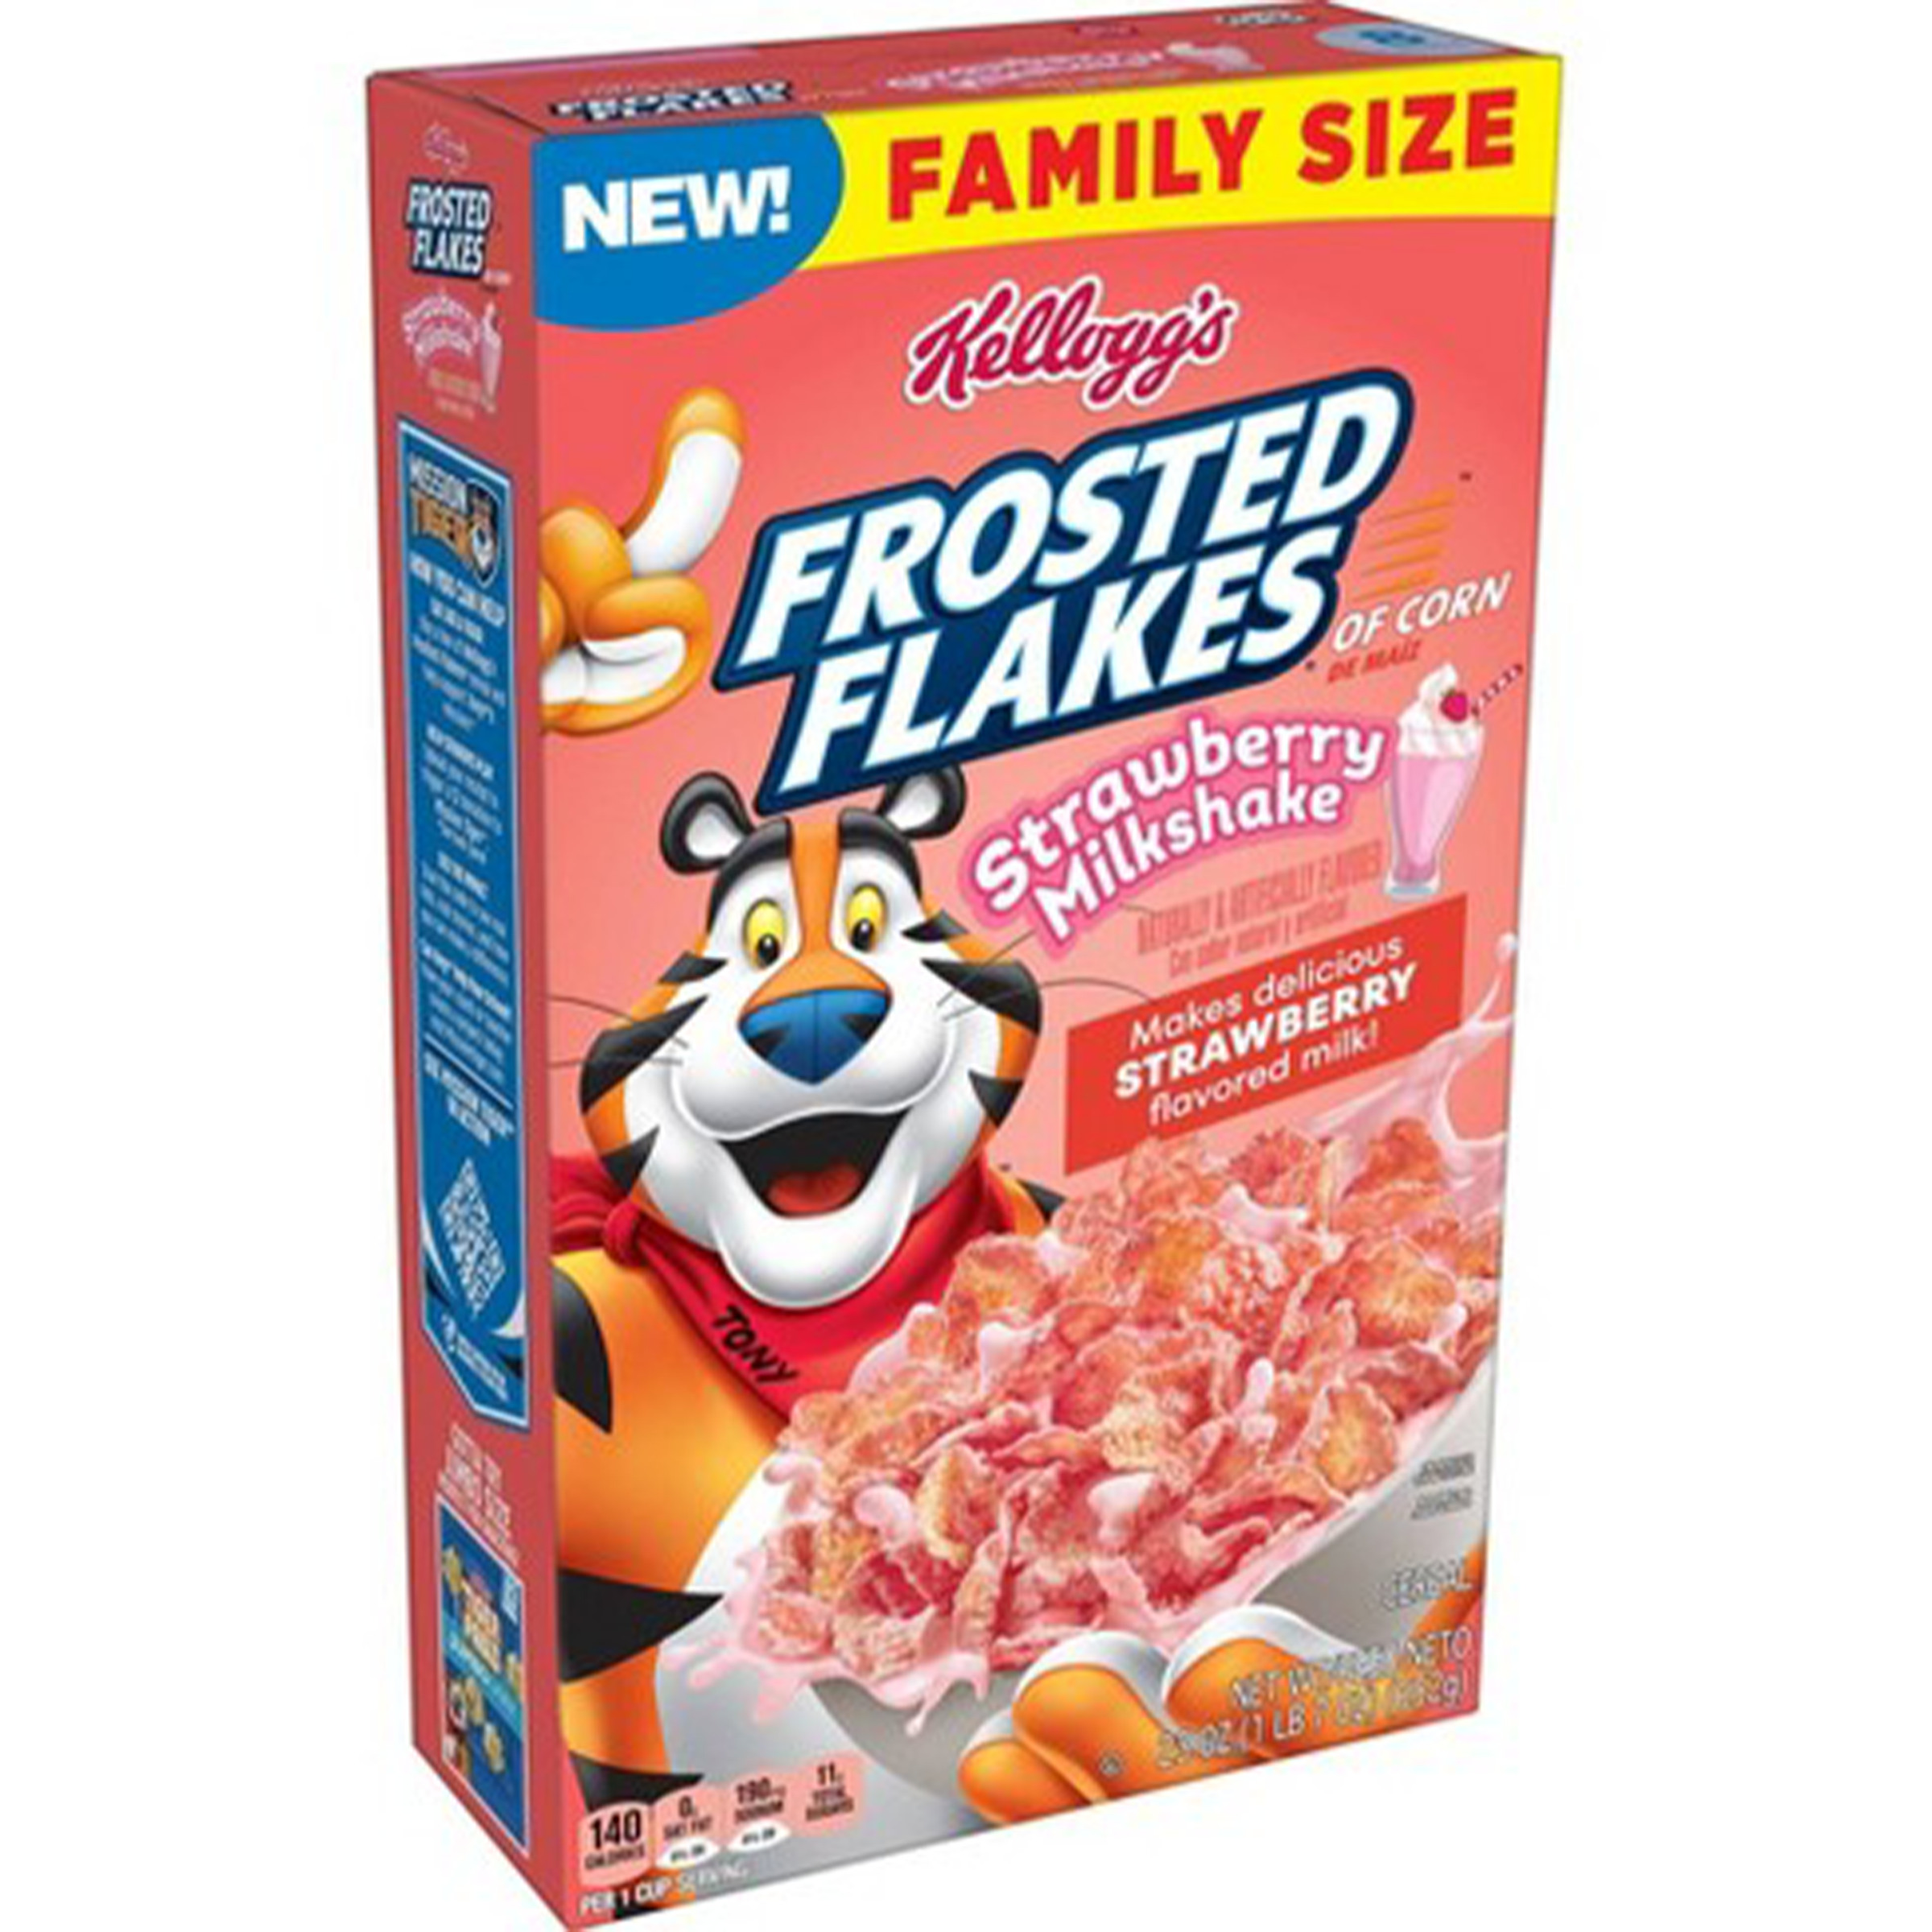 Frosted Flakes Strawberry Milkshake - Family Size